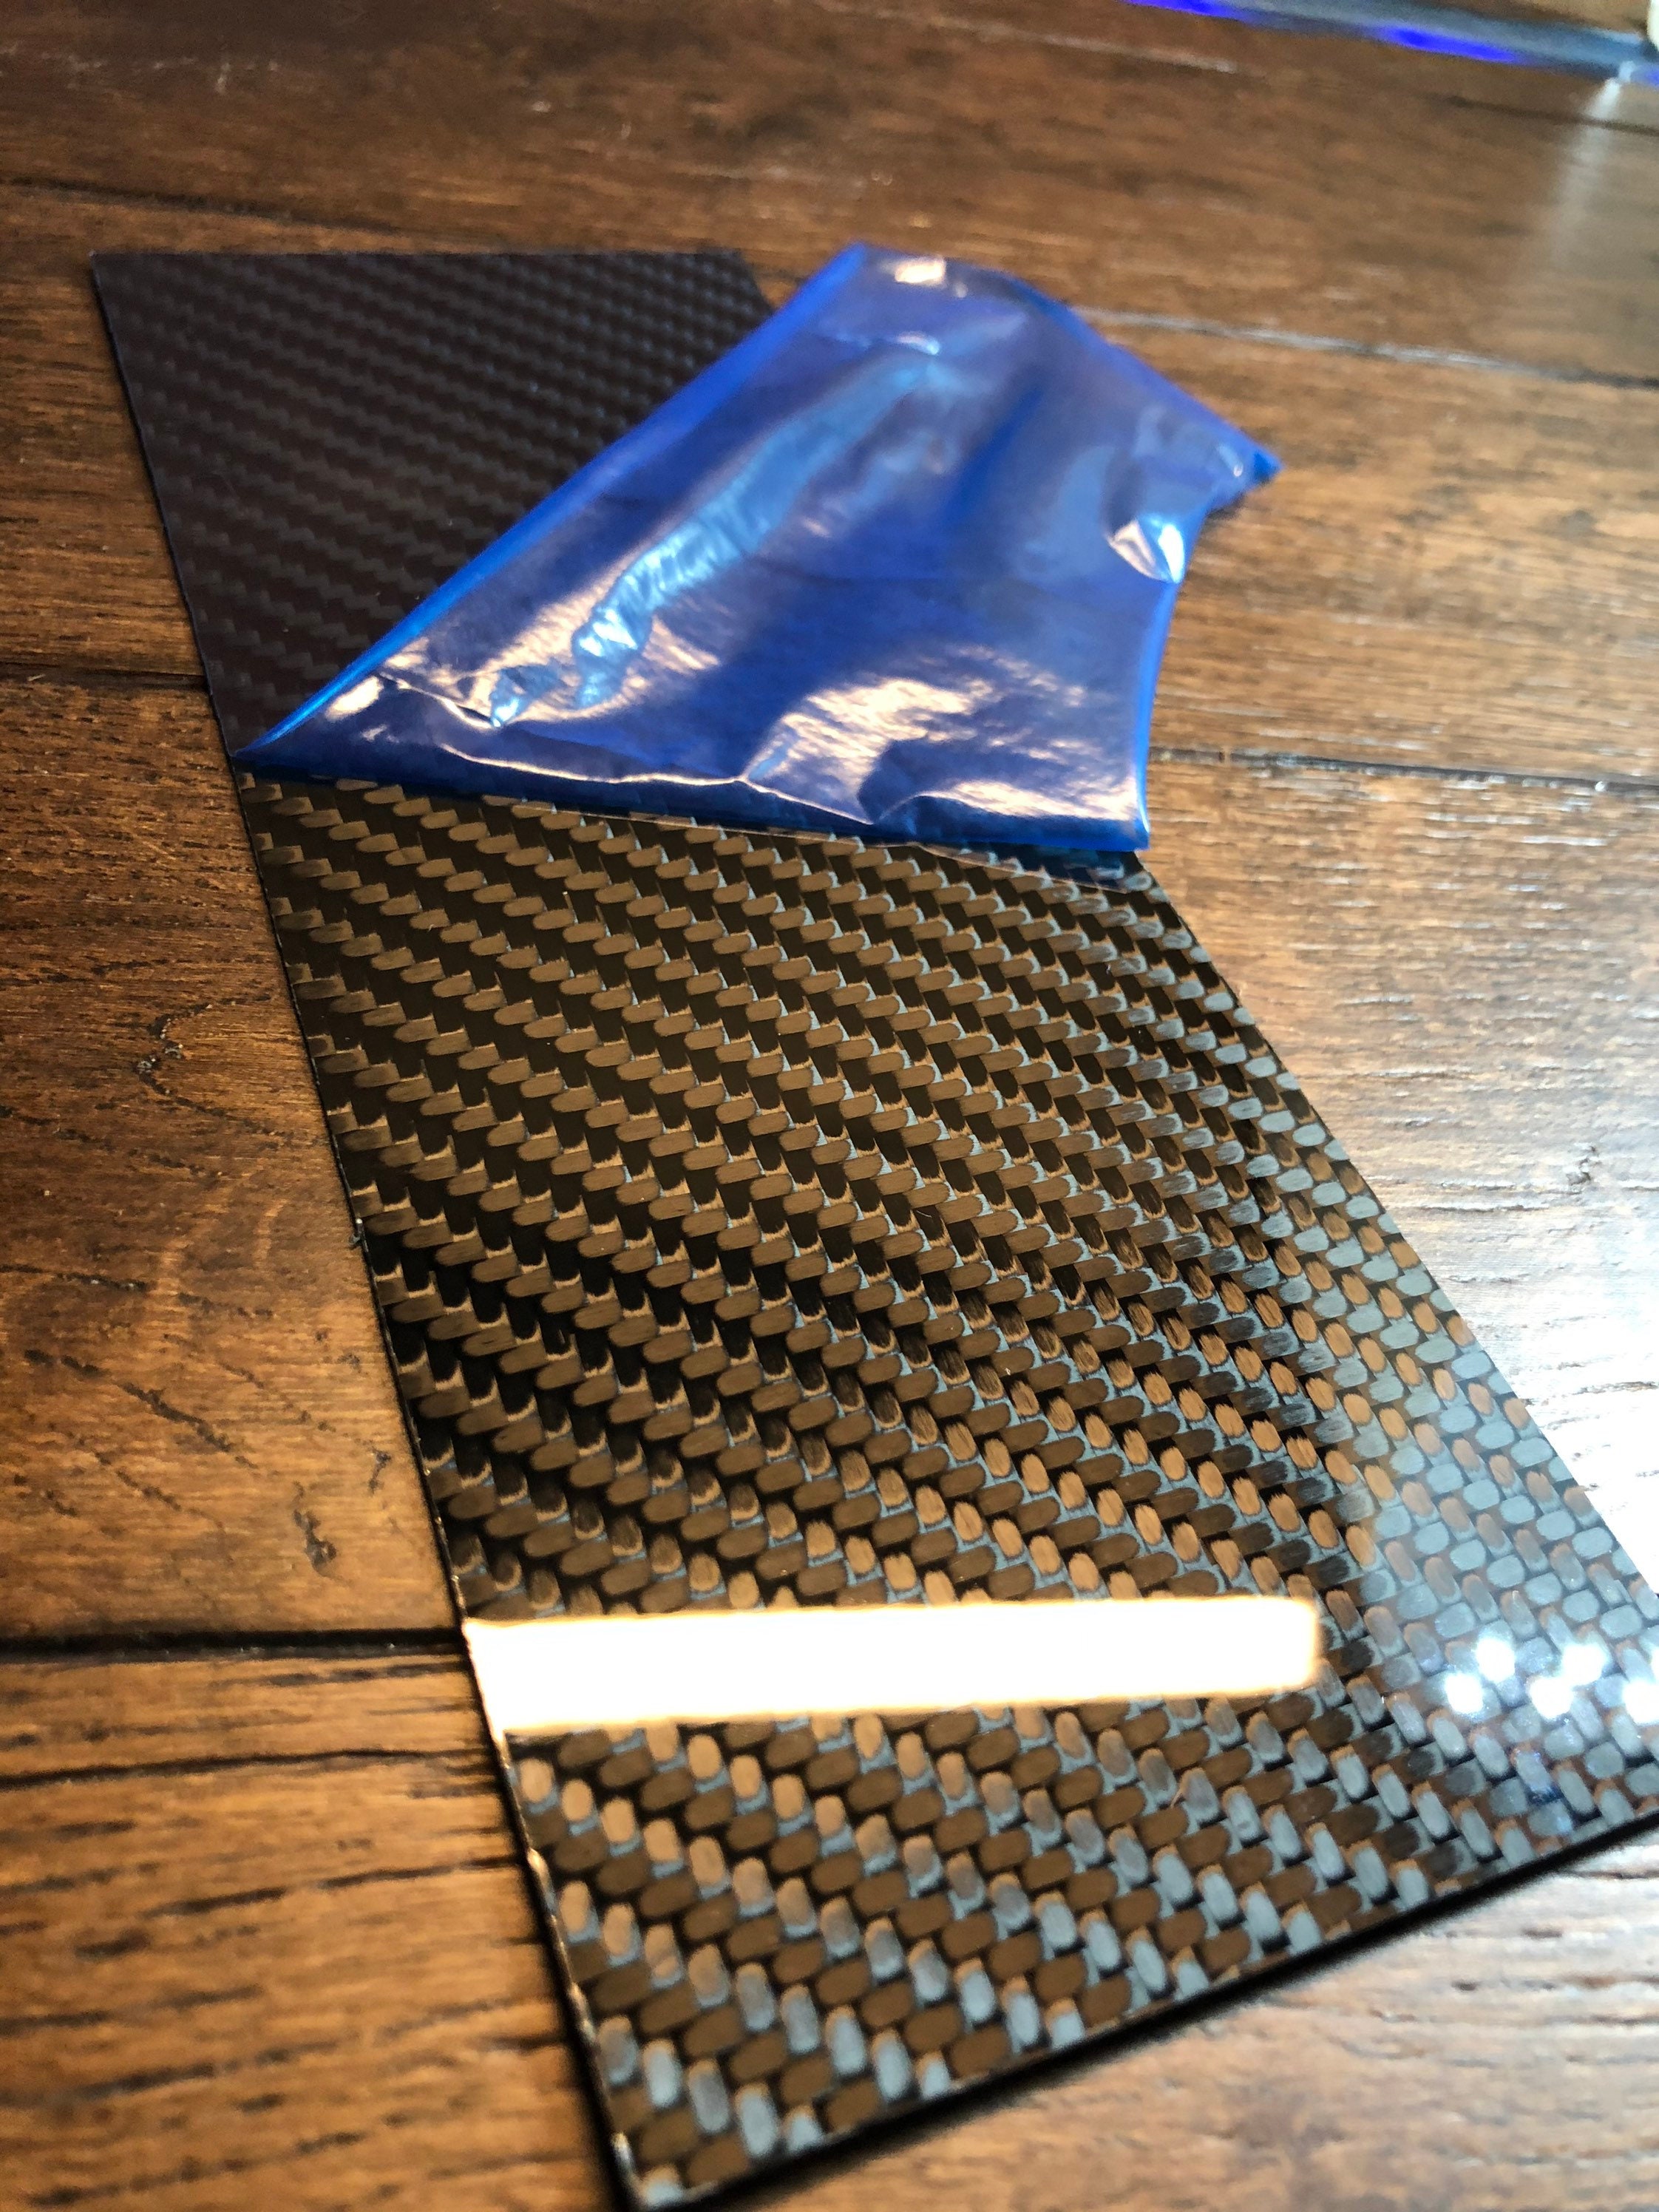 Real Carbon Fibre Veneer Sheet Flexible 3m Self Adhesive High Quality 300mm  X 100mm -  Canada